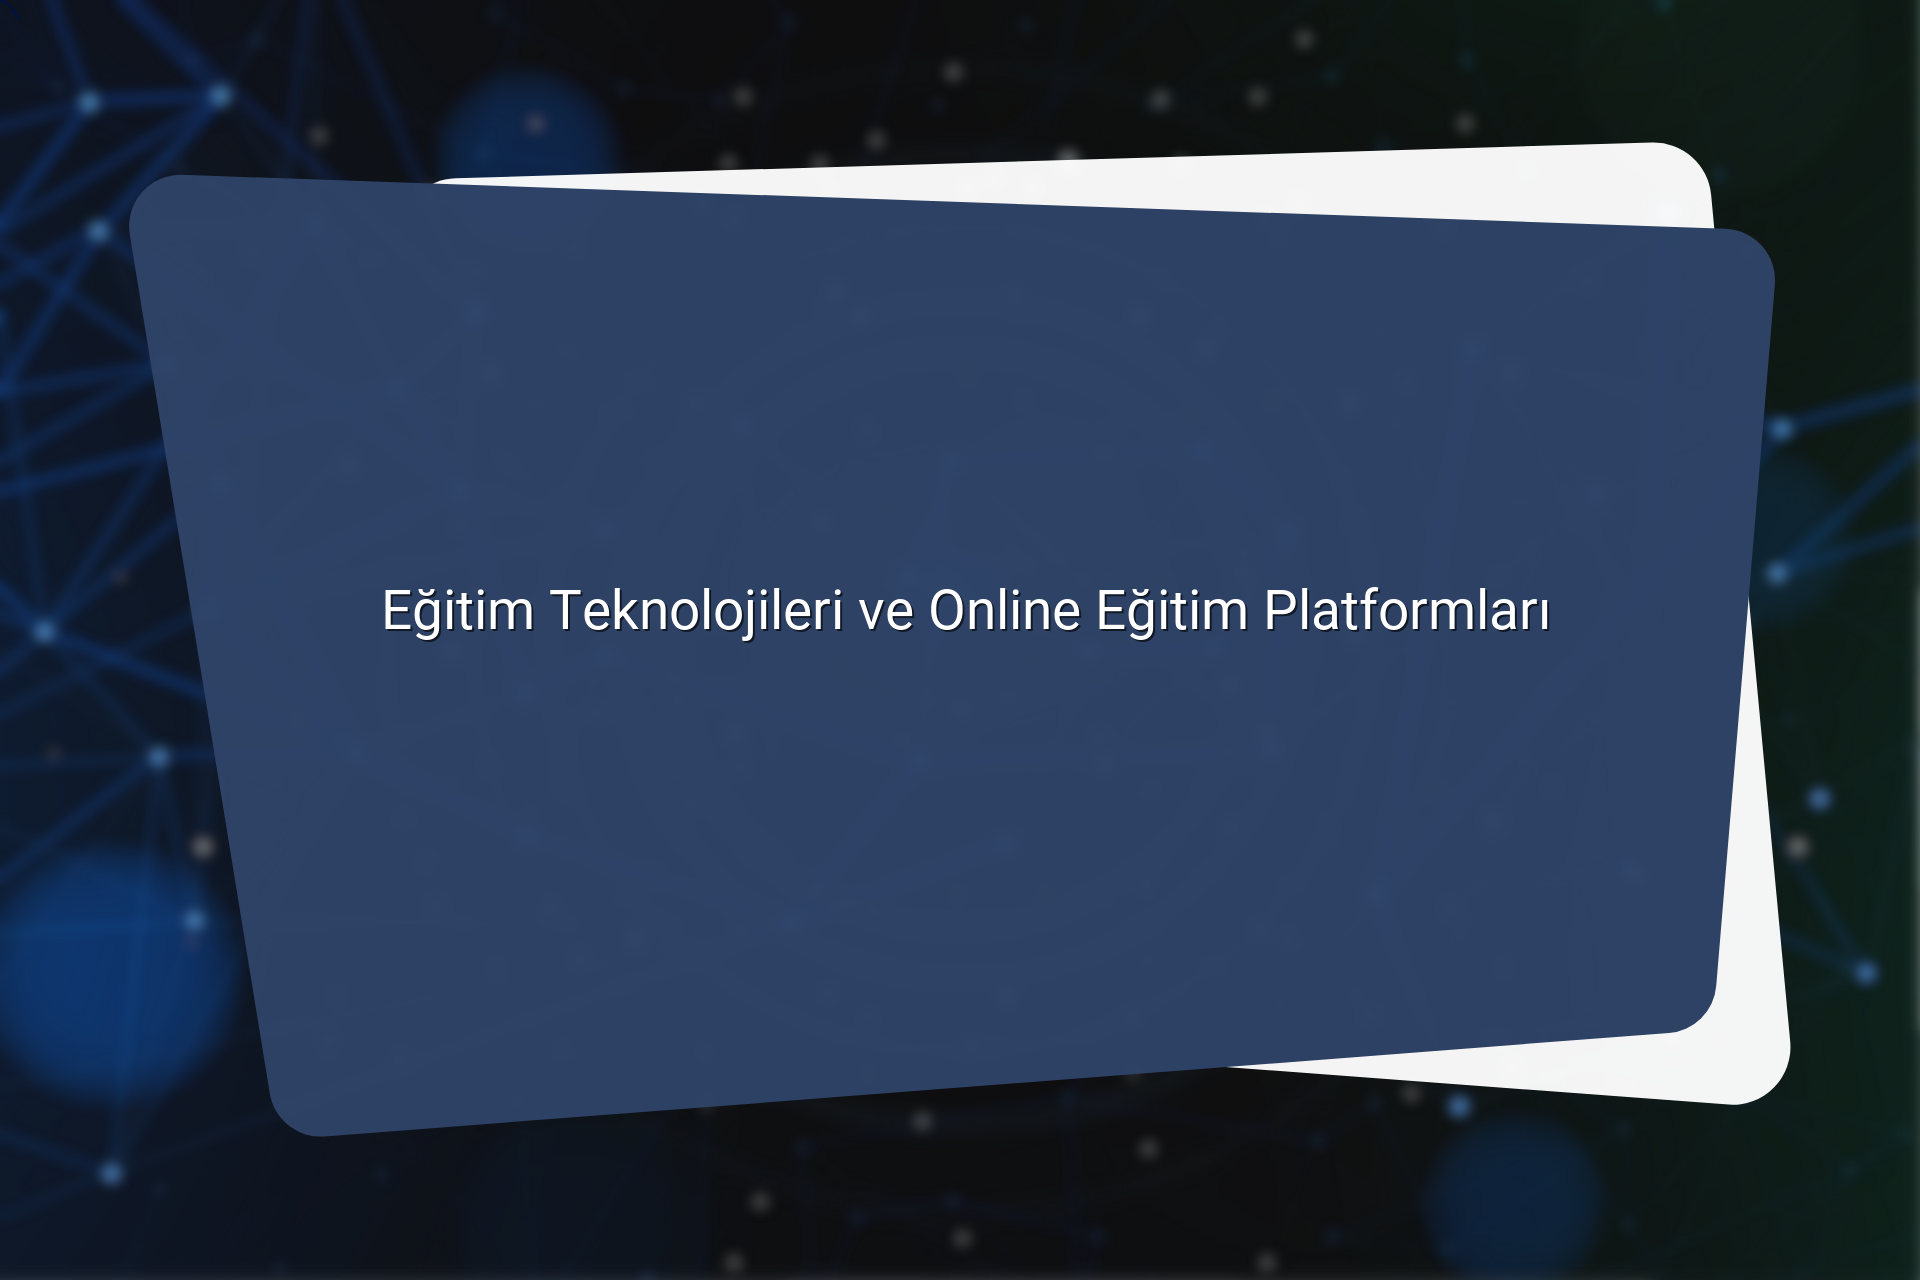 Egitim Teknolojileri ve Online Egitim Platformlari